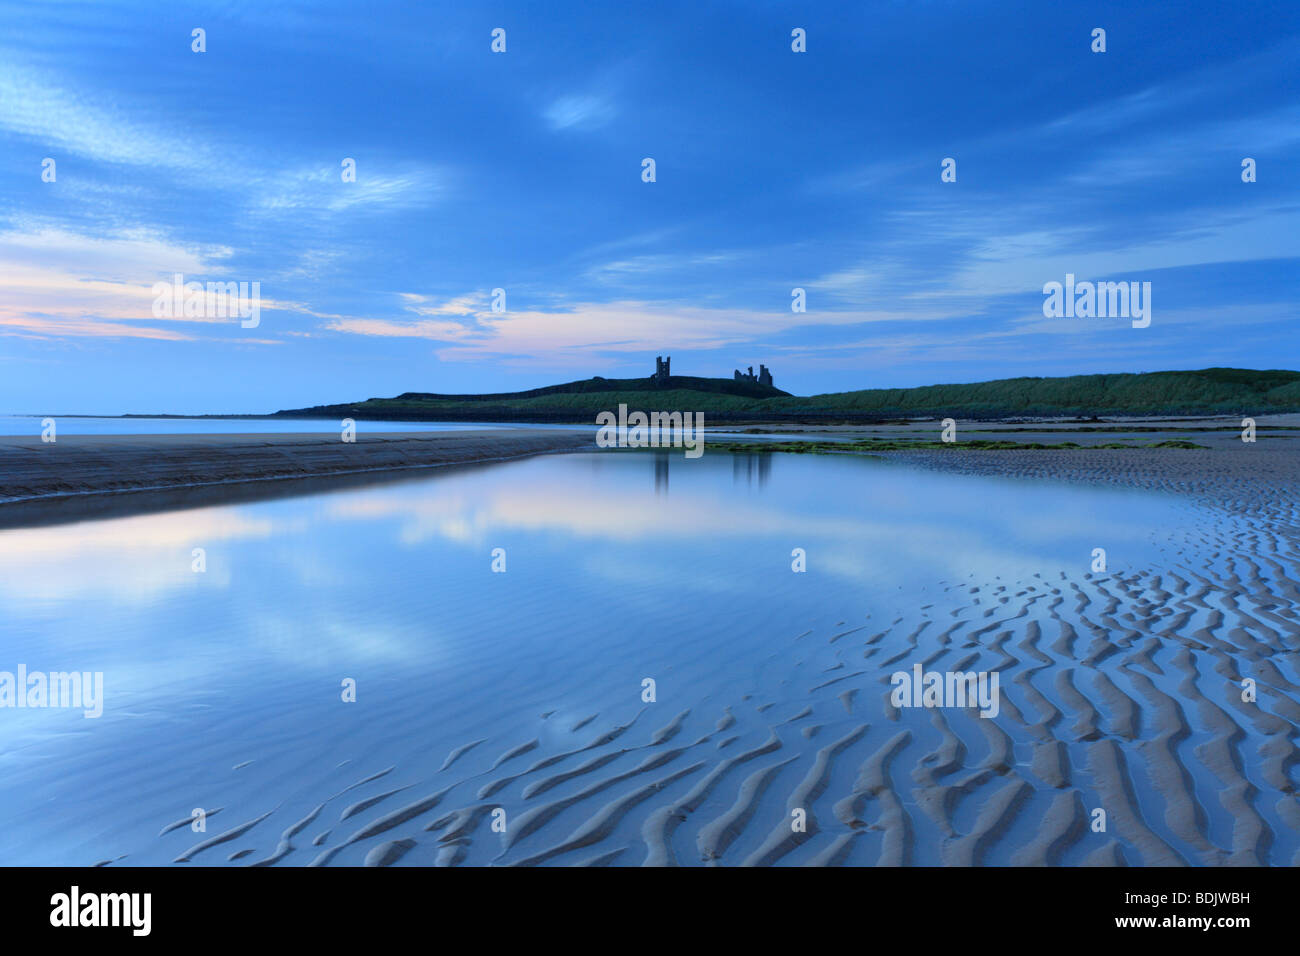 Dawn Embleton Bay, Dunstanburgh Castle on the horizon. Sunrise Northumberland coastal scene, reflections in pool. Stock Photo